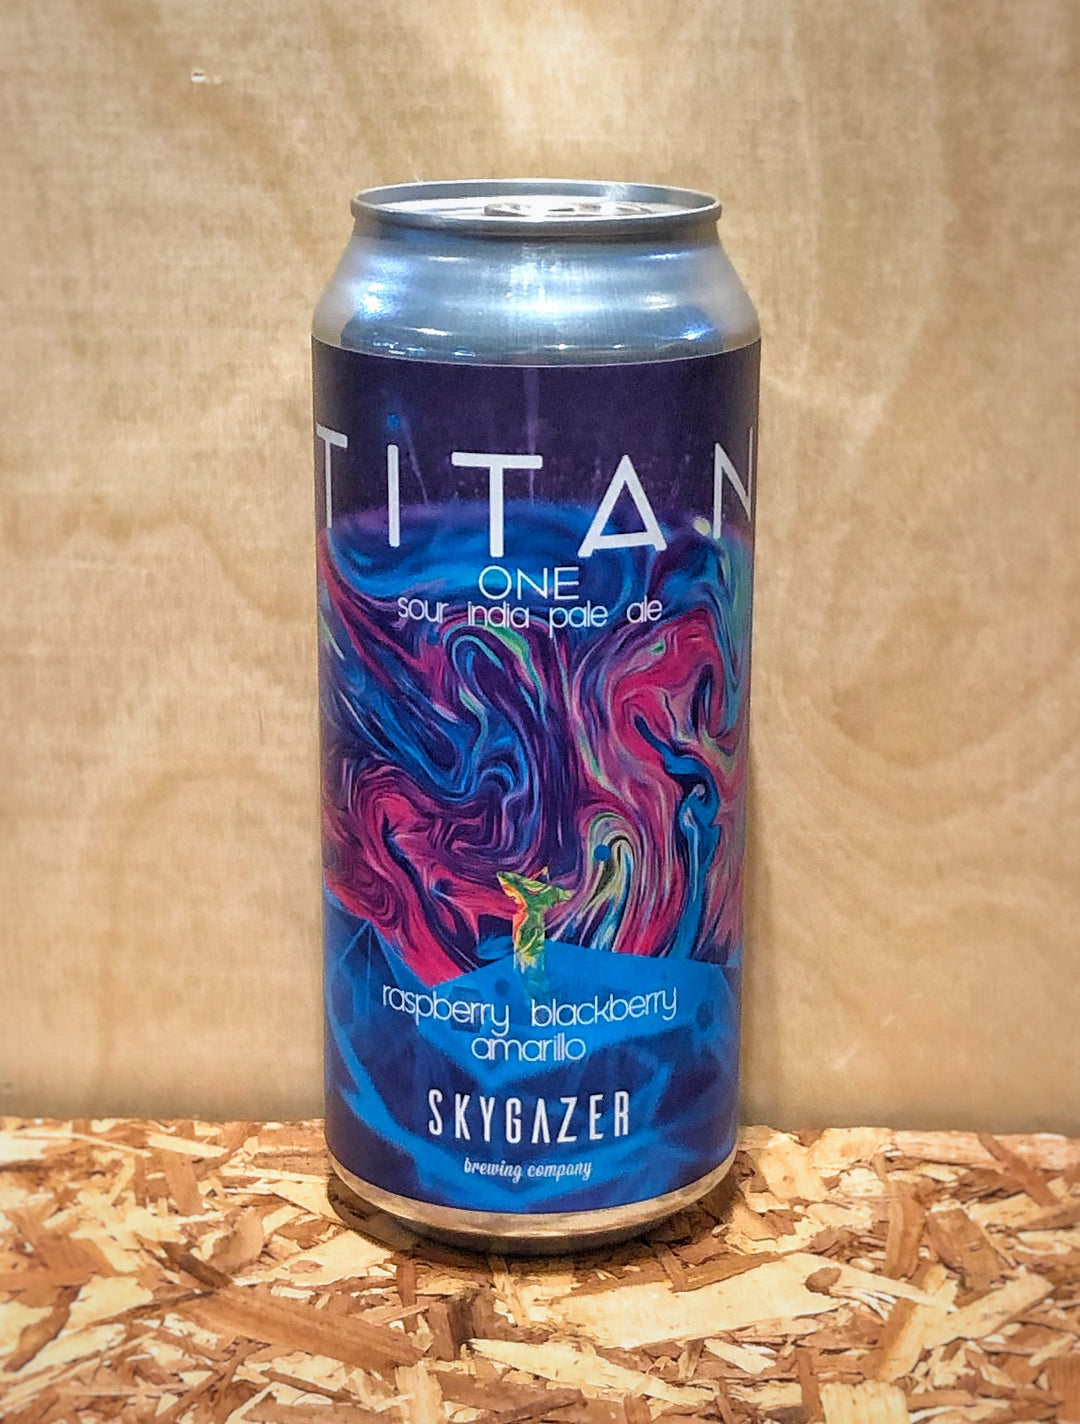 Skygazer Brewing Company 'Titan One' Sour India Pale Ale (North Haven, CT)